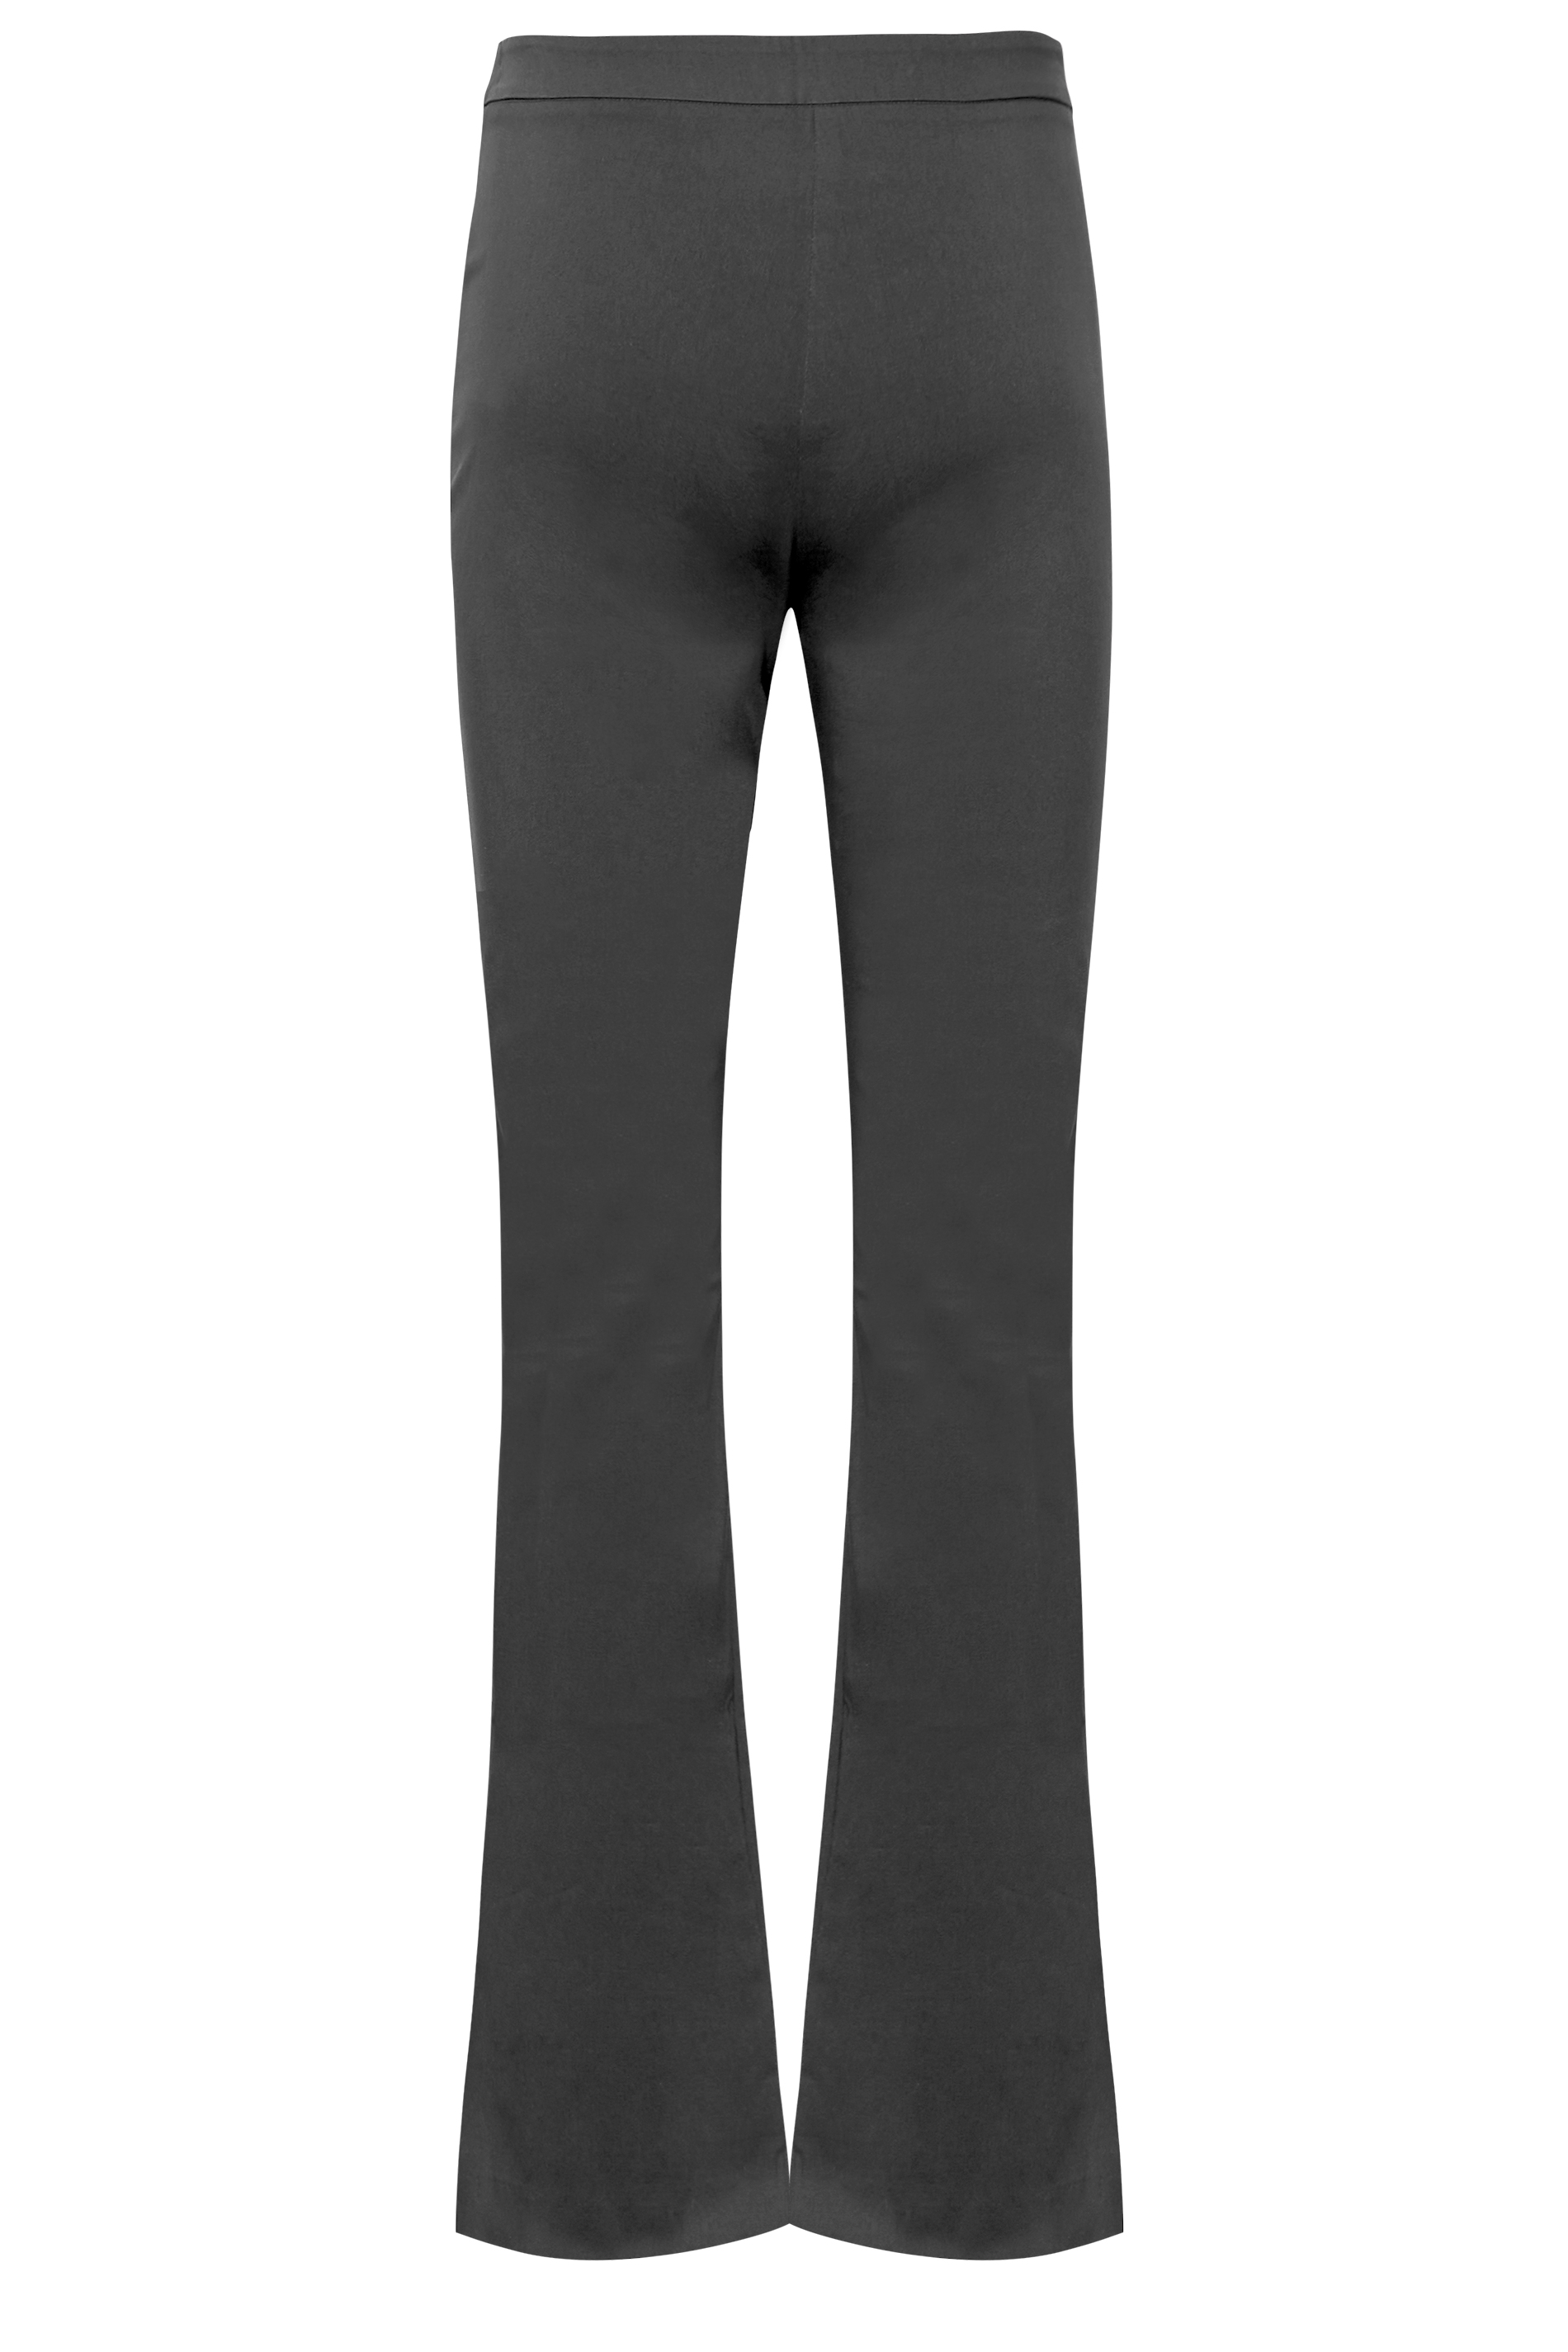 LTS Tall Women's Grey Bi Stretch Bootcut Trousers | Long Tall Sally 3